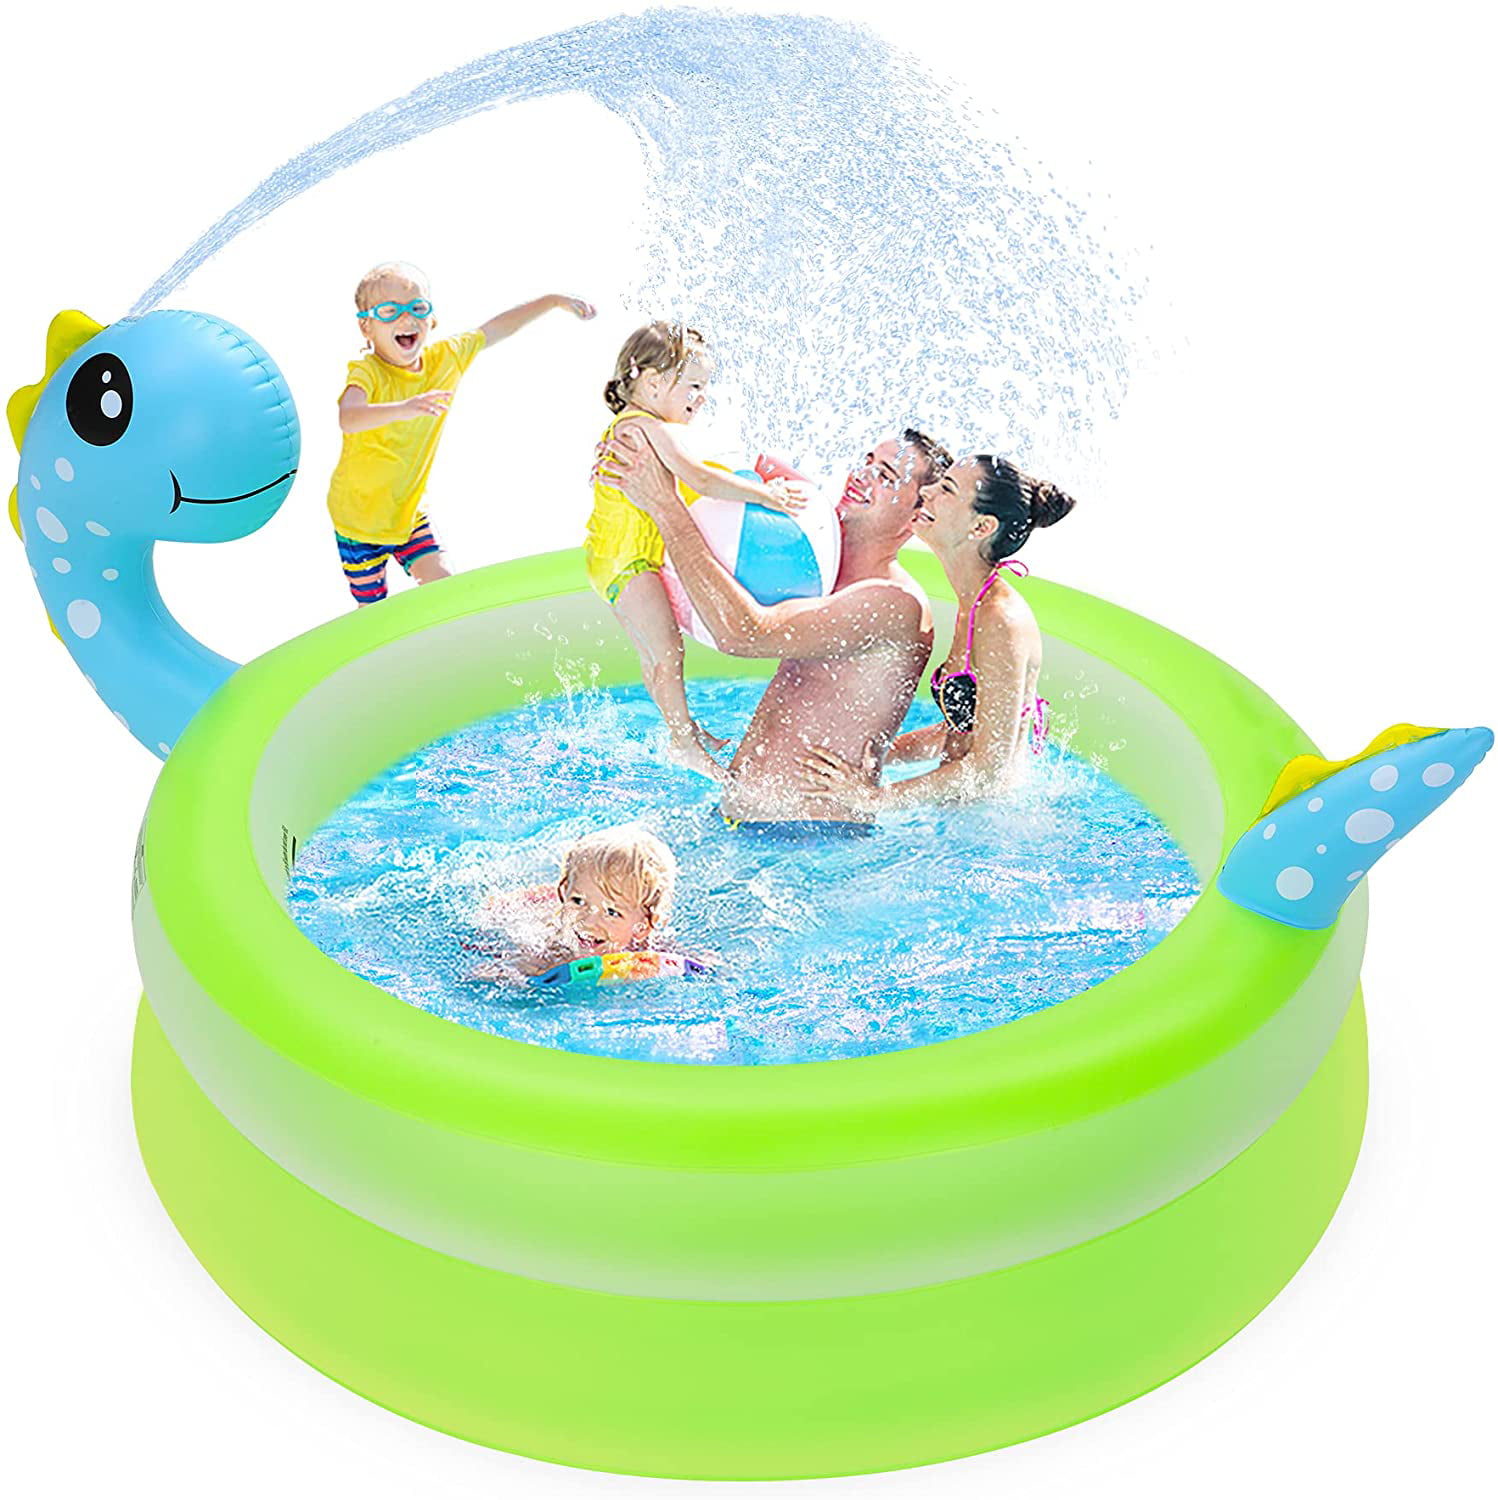 for Toddler Outdoor Summer Gift Garden Dinosaur Inflatable Sprinkler Swimming Pool,Kiddie Pool,Outdoor Water Play Sprinklers,Family Lounge Water Park Backyard 